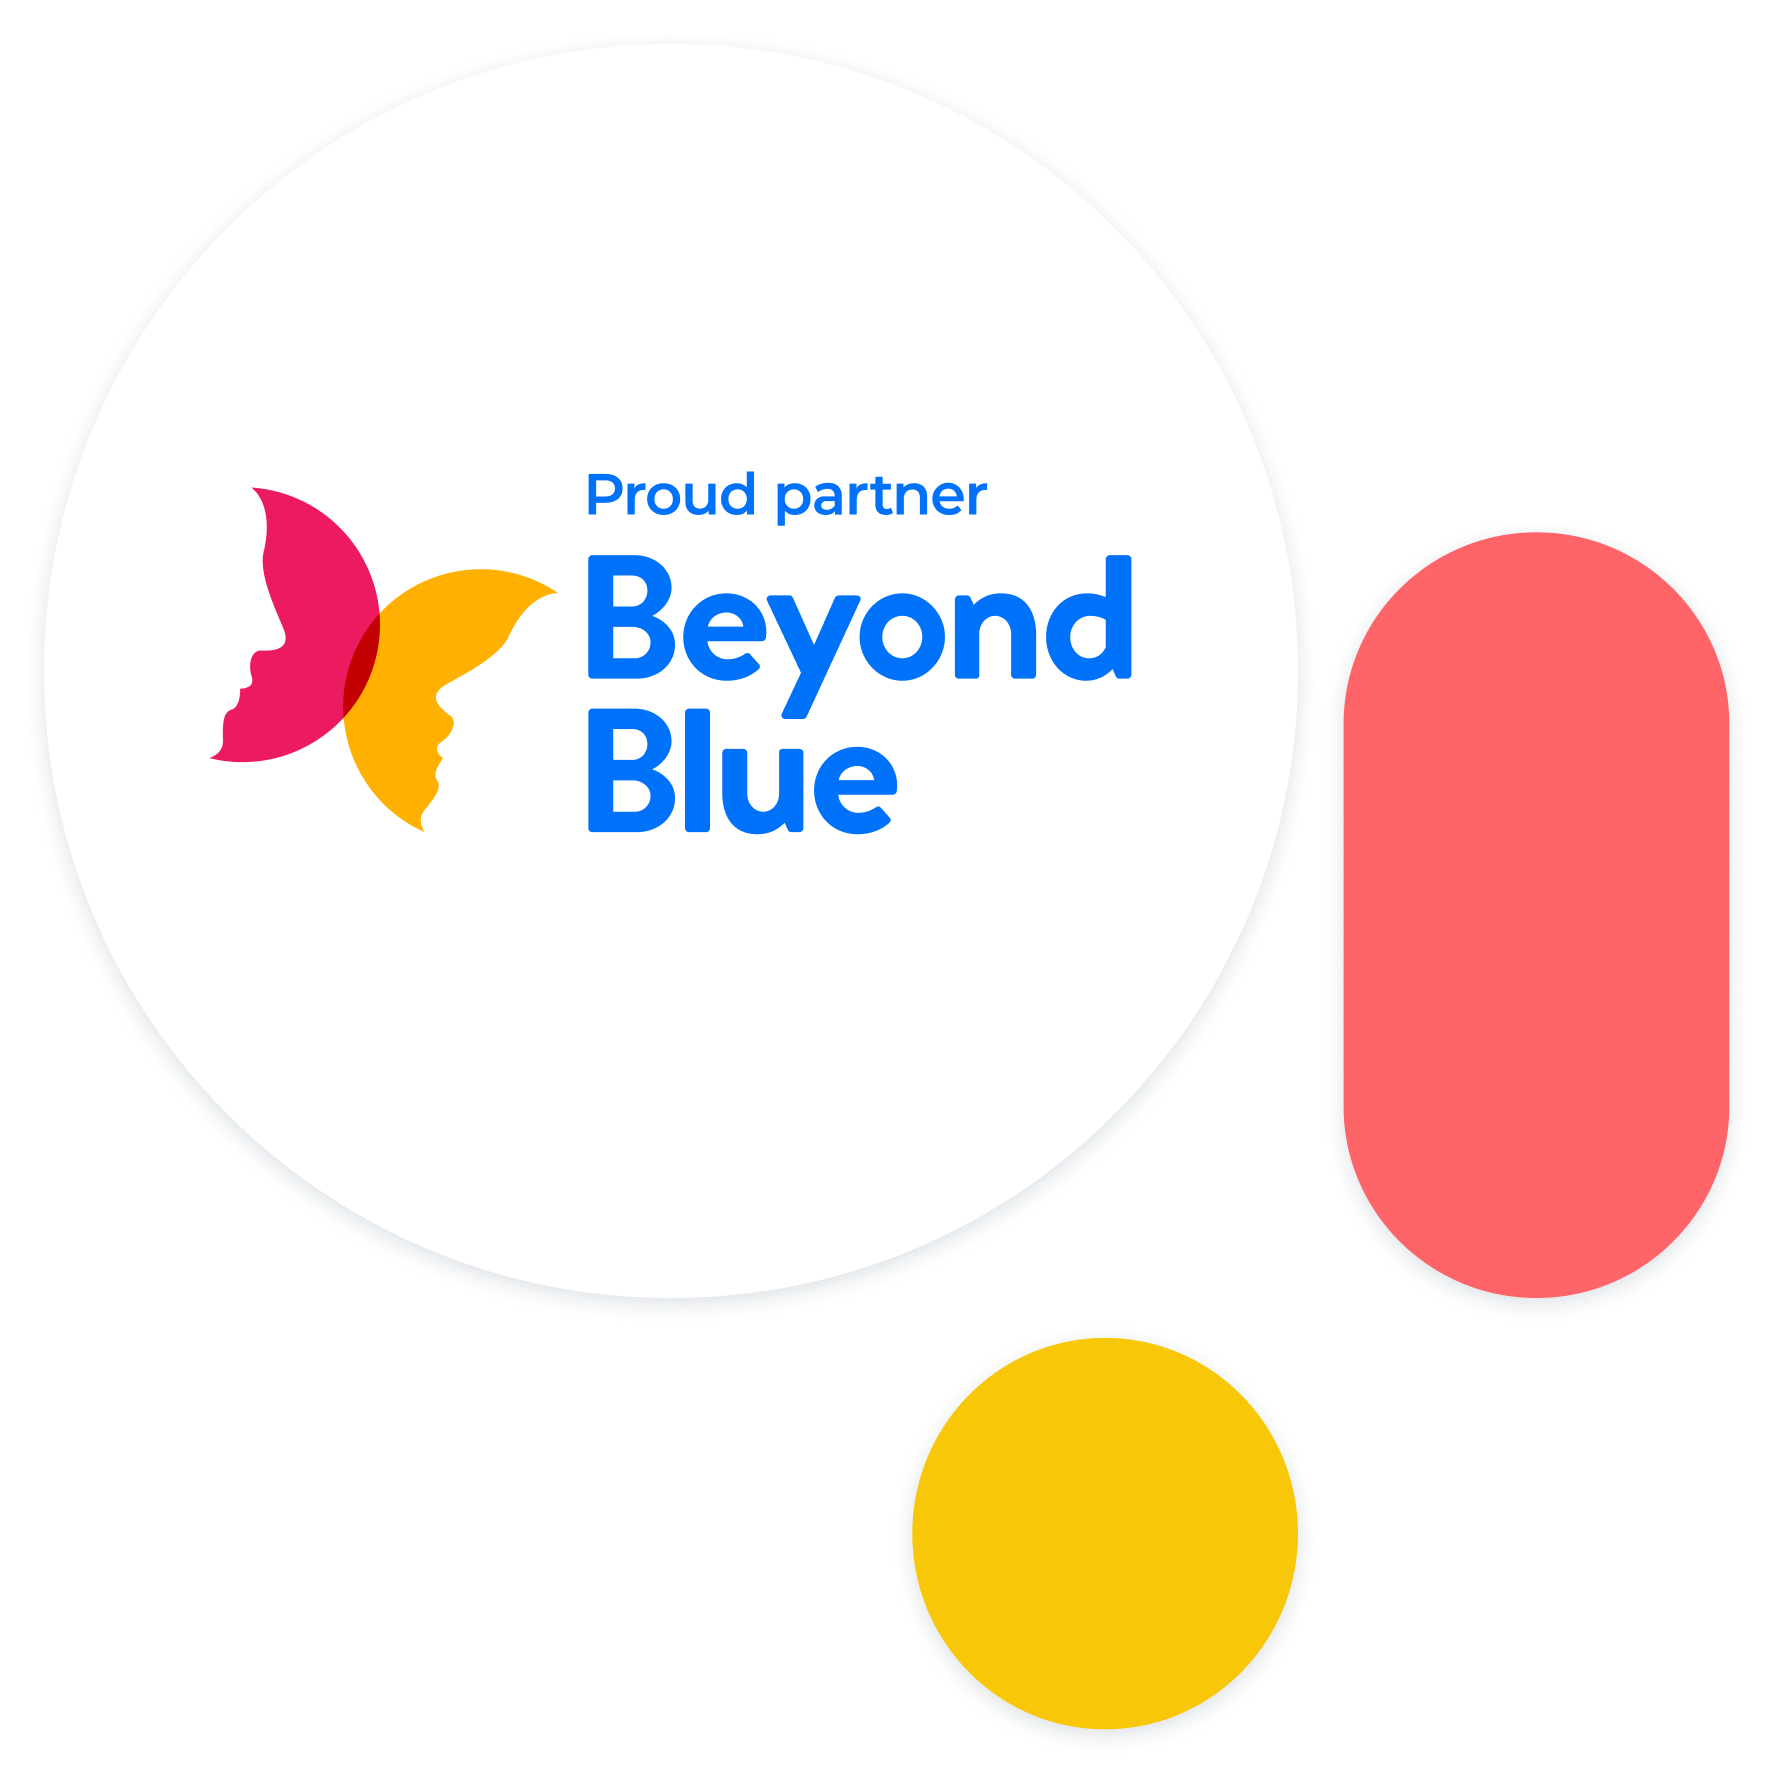 Beyond blue logo